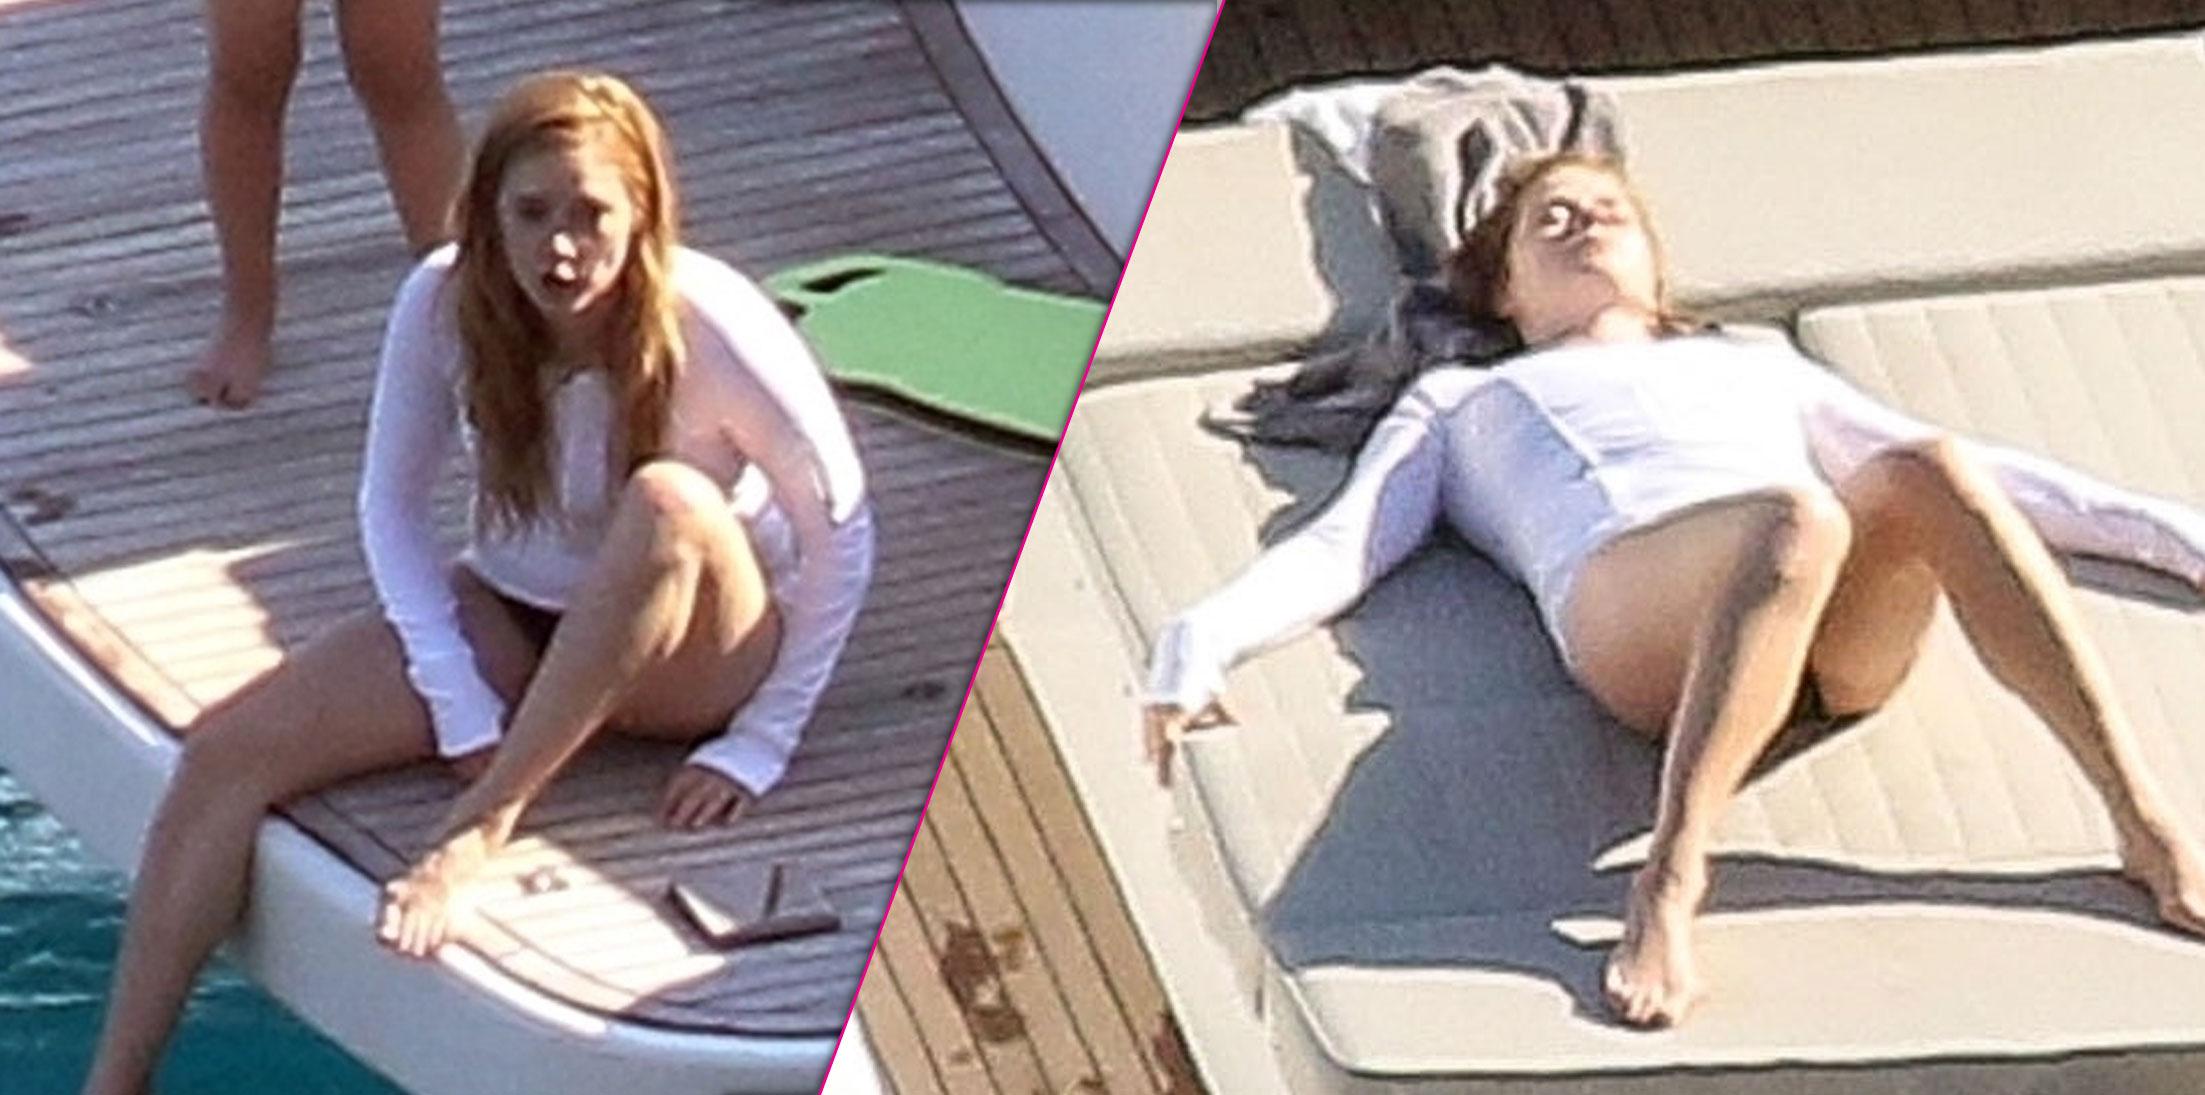 PICS Amy Adams Shows Off Her Bikini Body On Yacht In Italy.